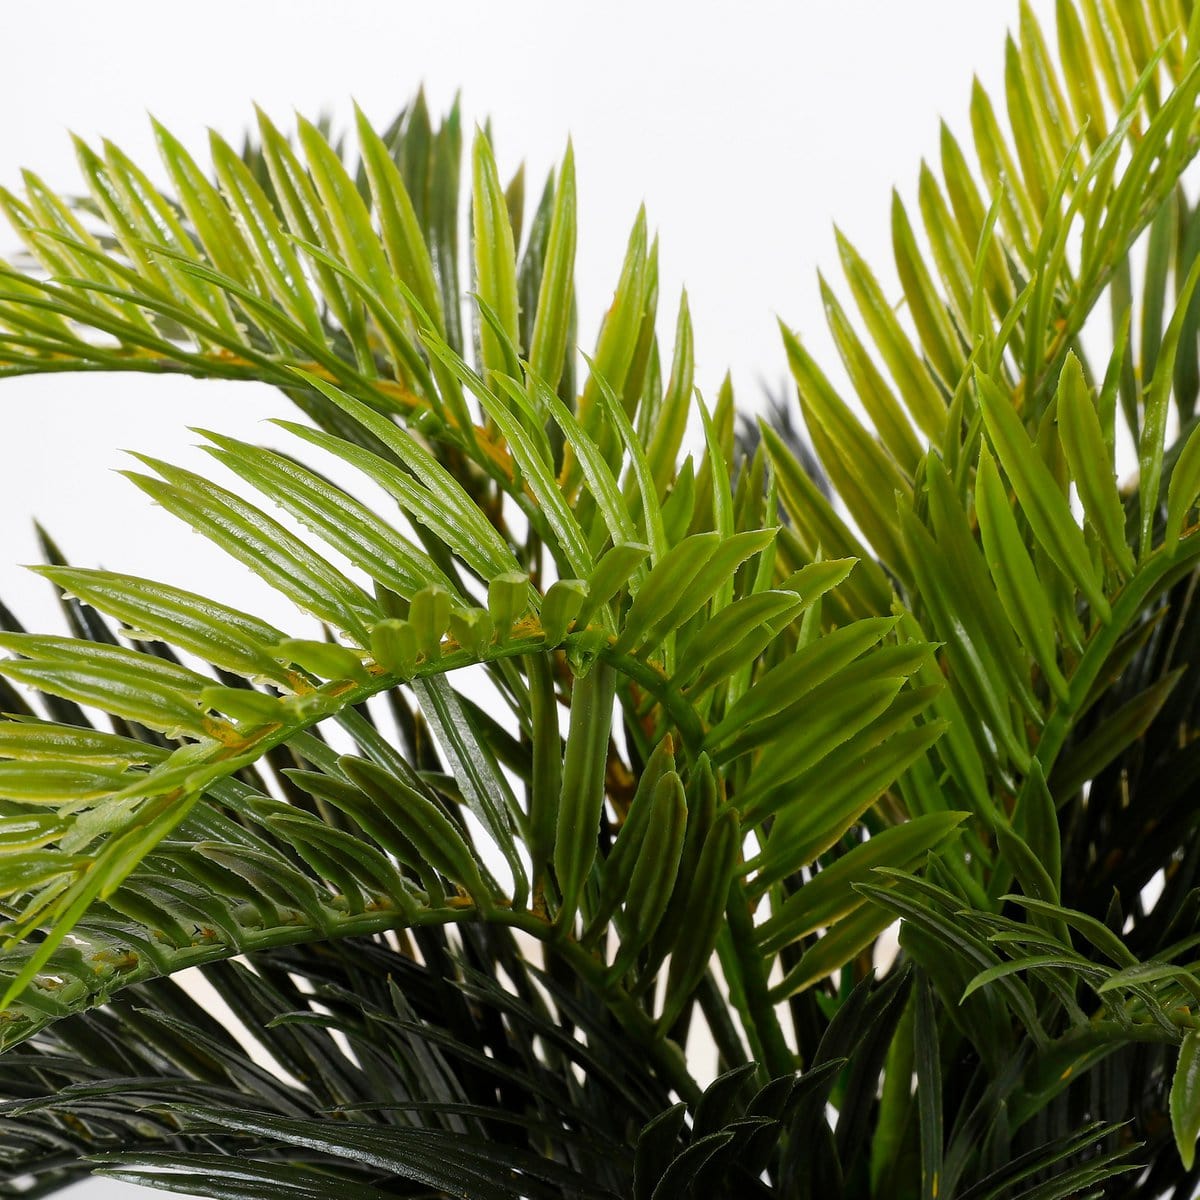 Mica Decorations Cycas Palm Kunstplant in Bloempot Stan - H37 x Ø44 cm - Groen